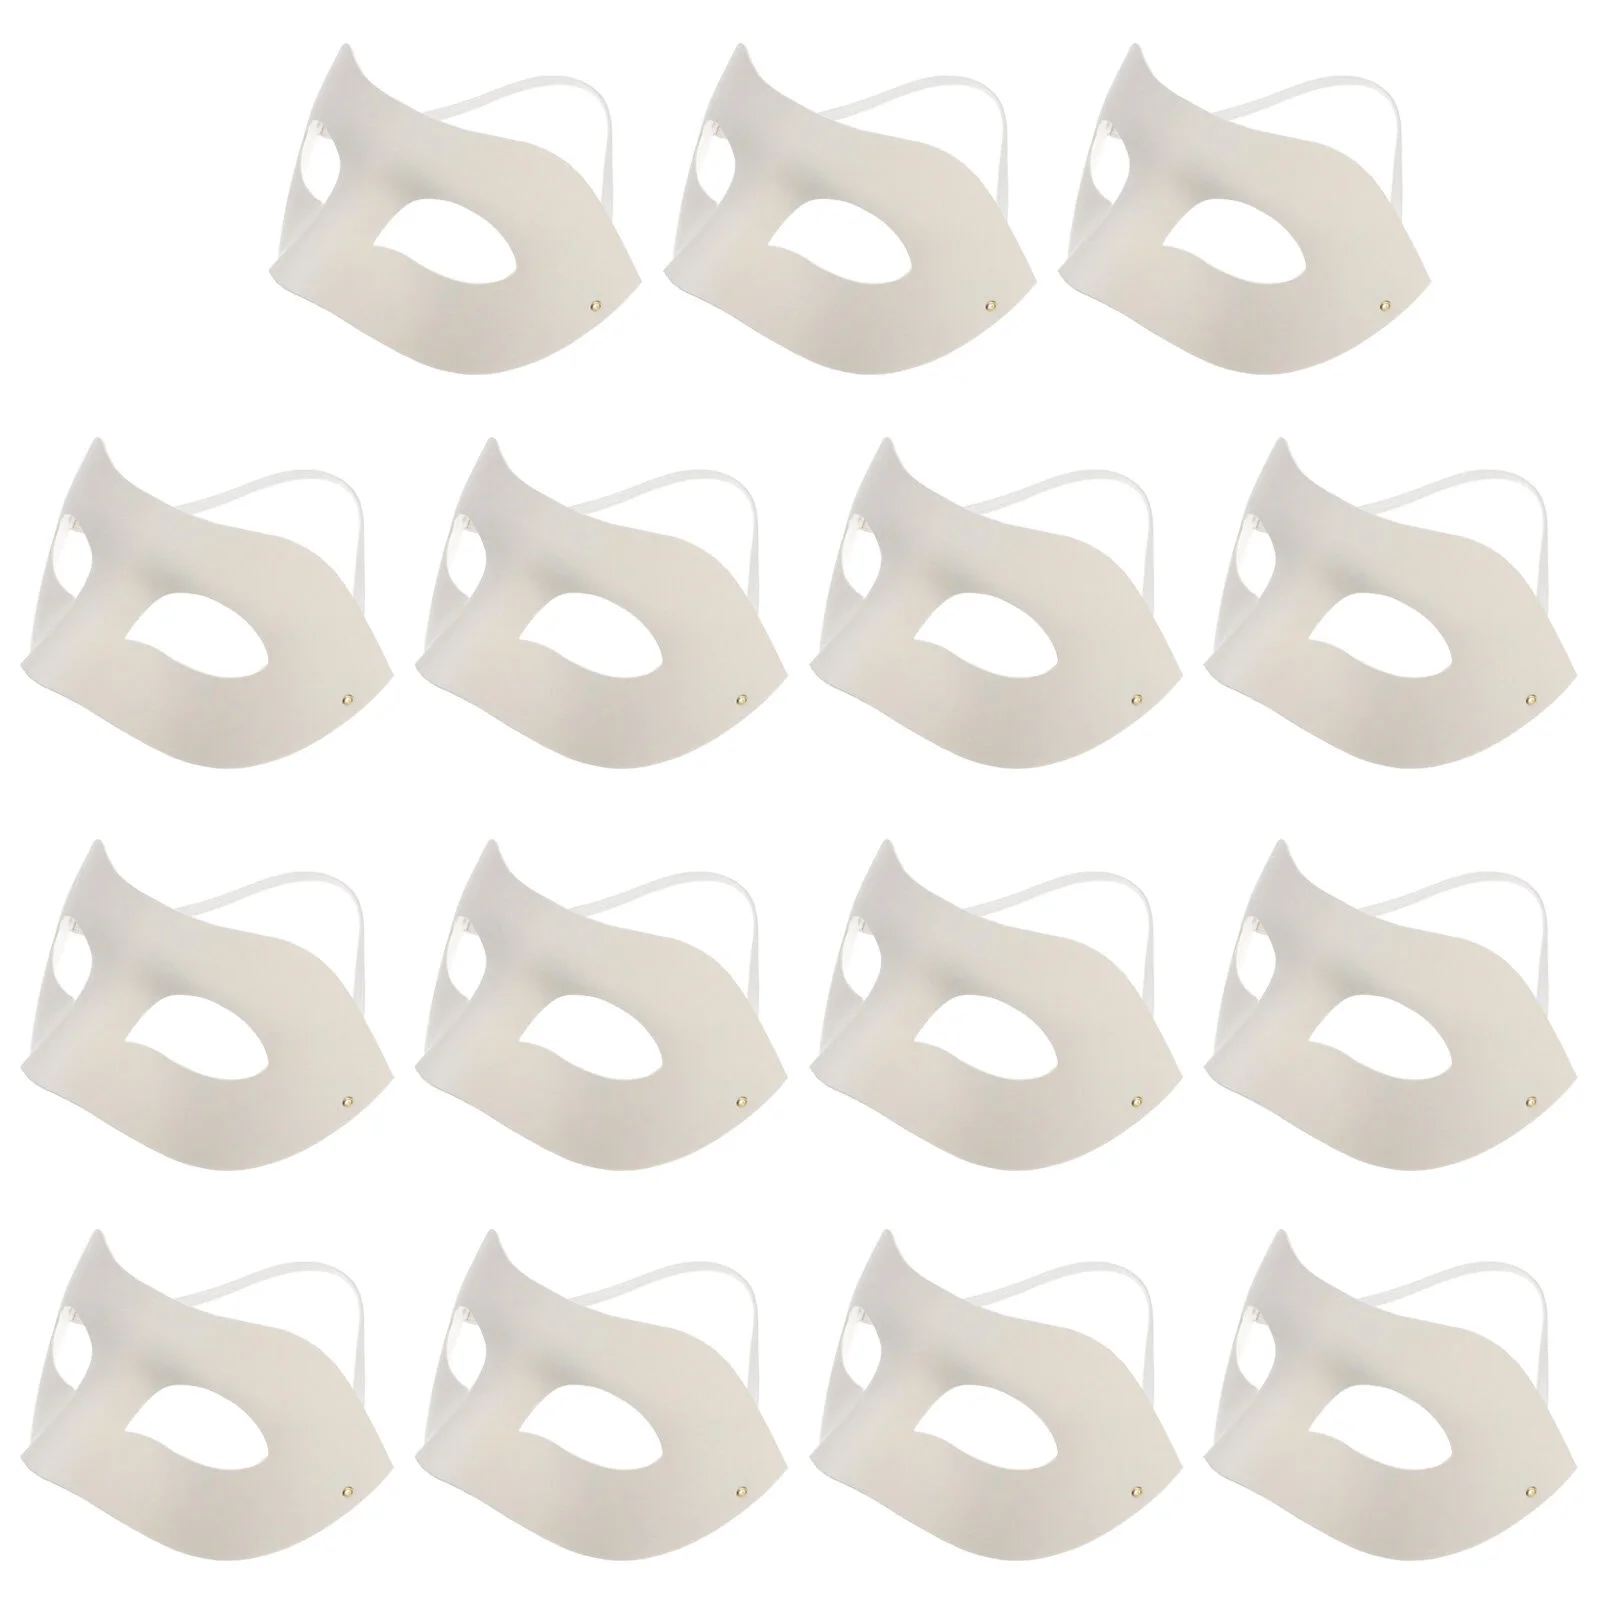 

15 Pcs DIY Pulp Mask White Masquerade Women Halloween Blank Masks Bulk Kids Toys Makeup Party Paper Crafts Miss